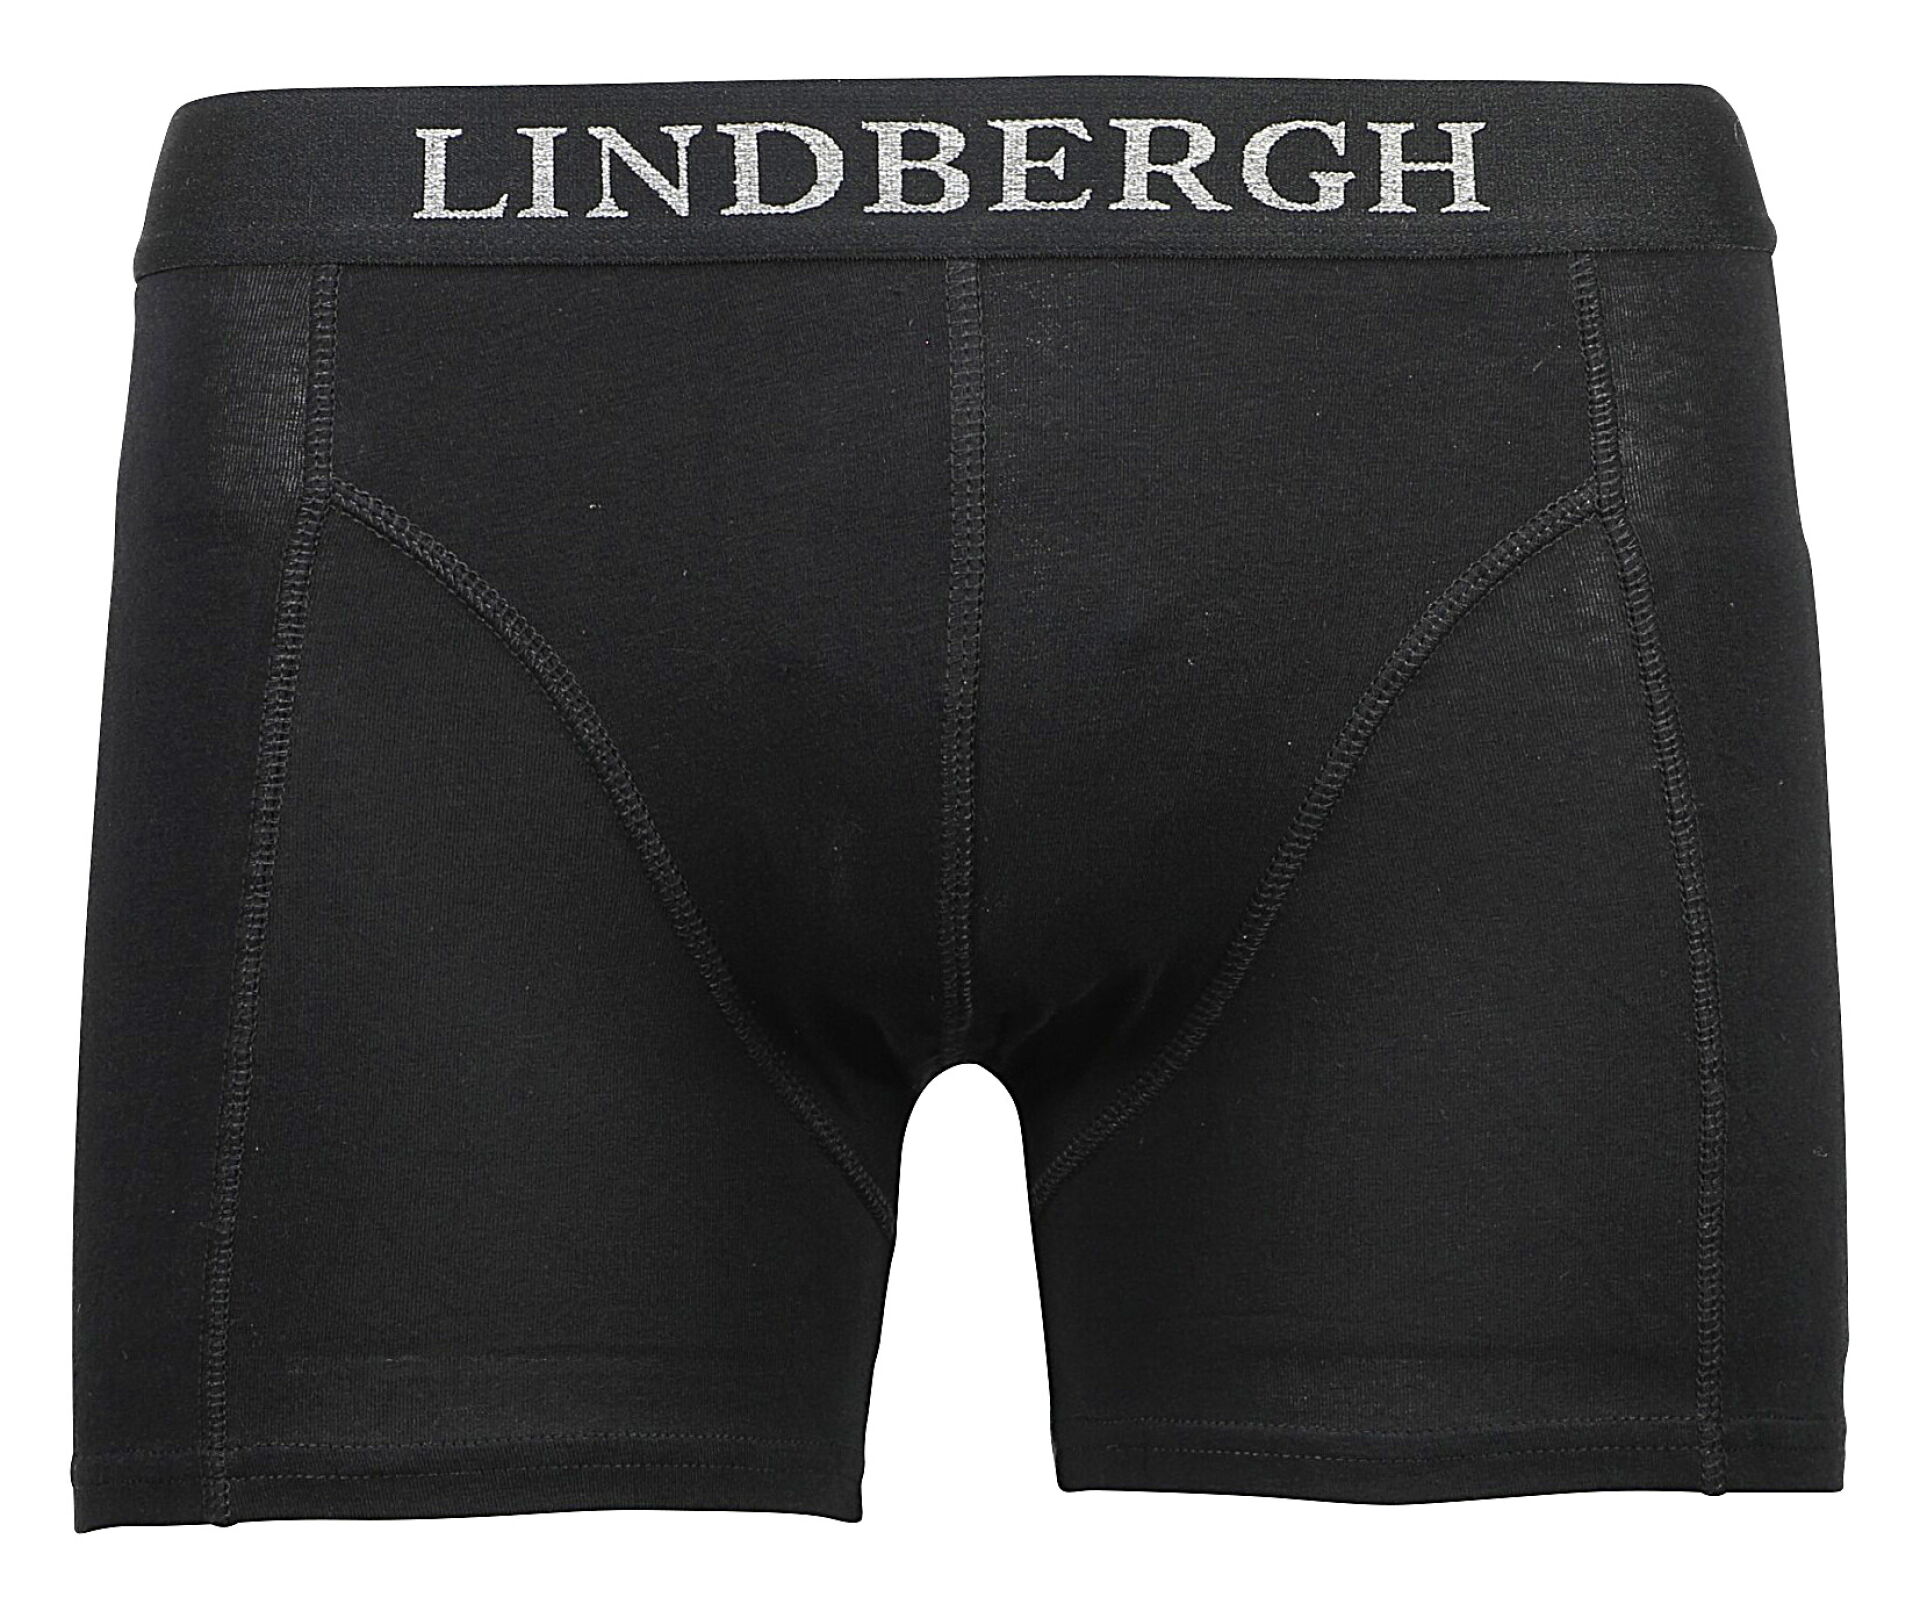 Lindbergh sorte tights